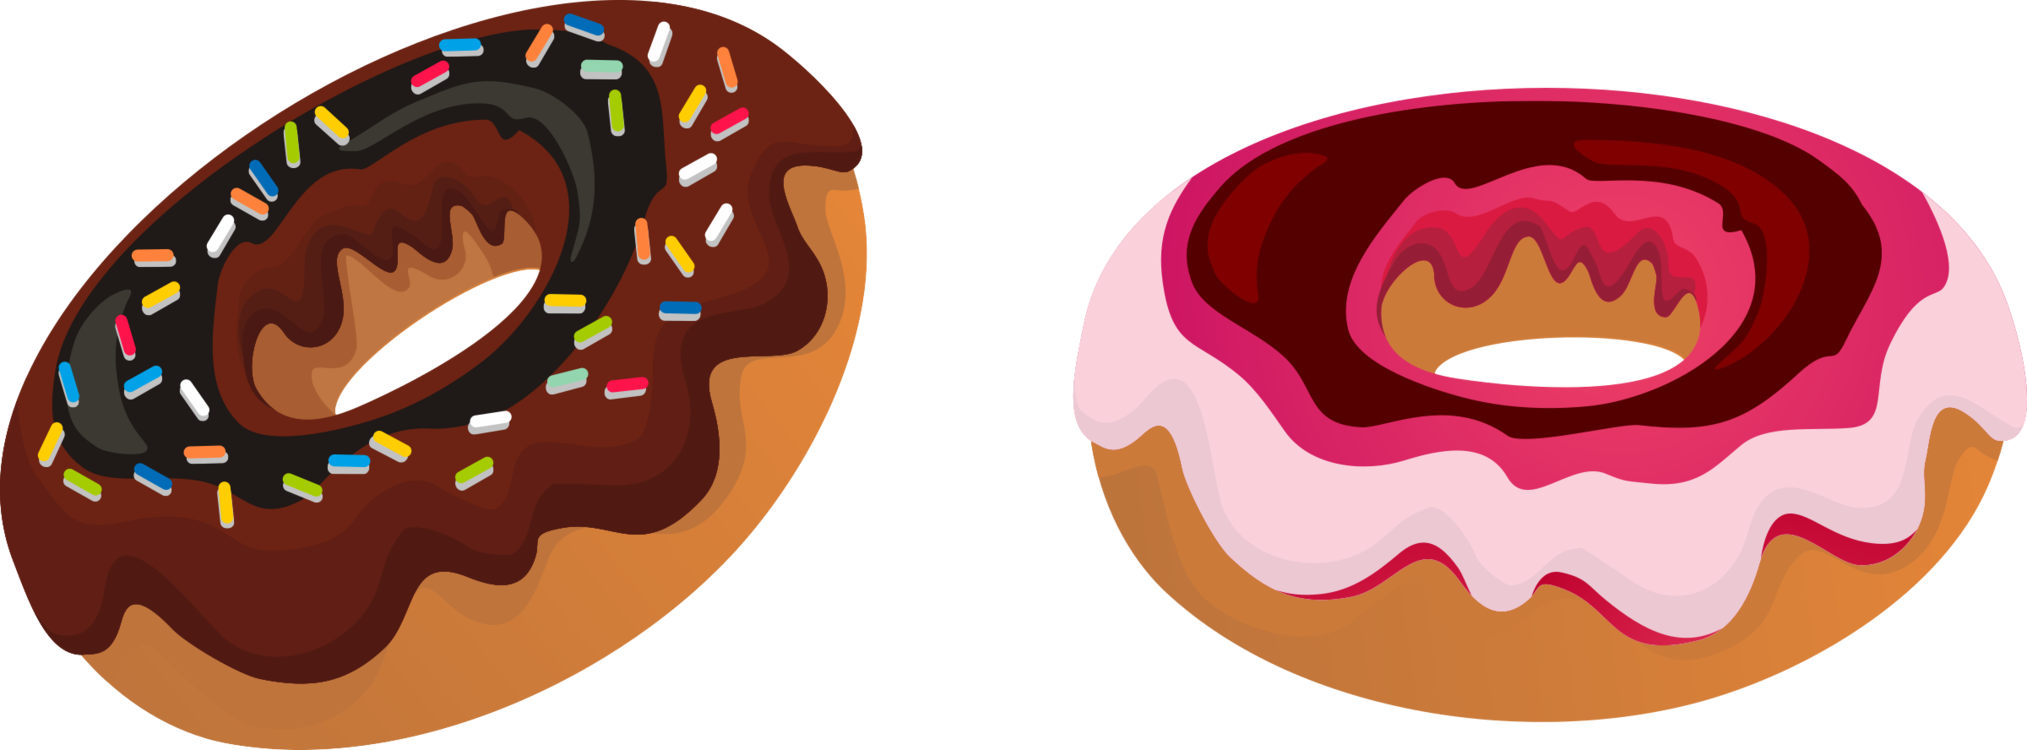 Dunkin' Donuts Sprinkles Cider Doughnut Pastry - Transparent Background Donut Clipart - Png Download (2027x750), Png Download